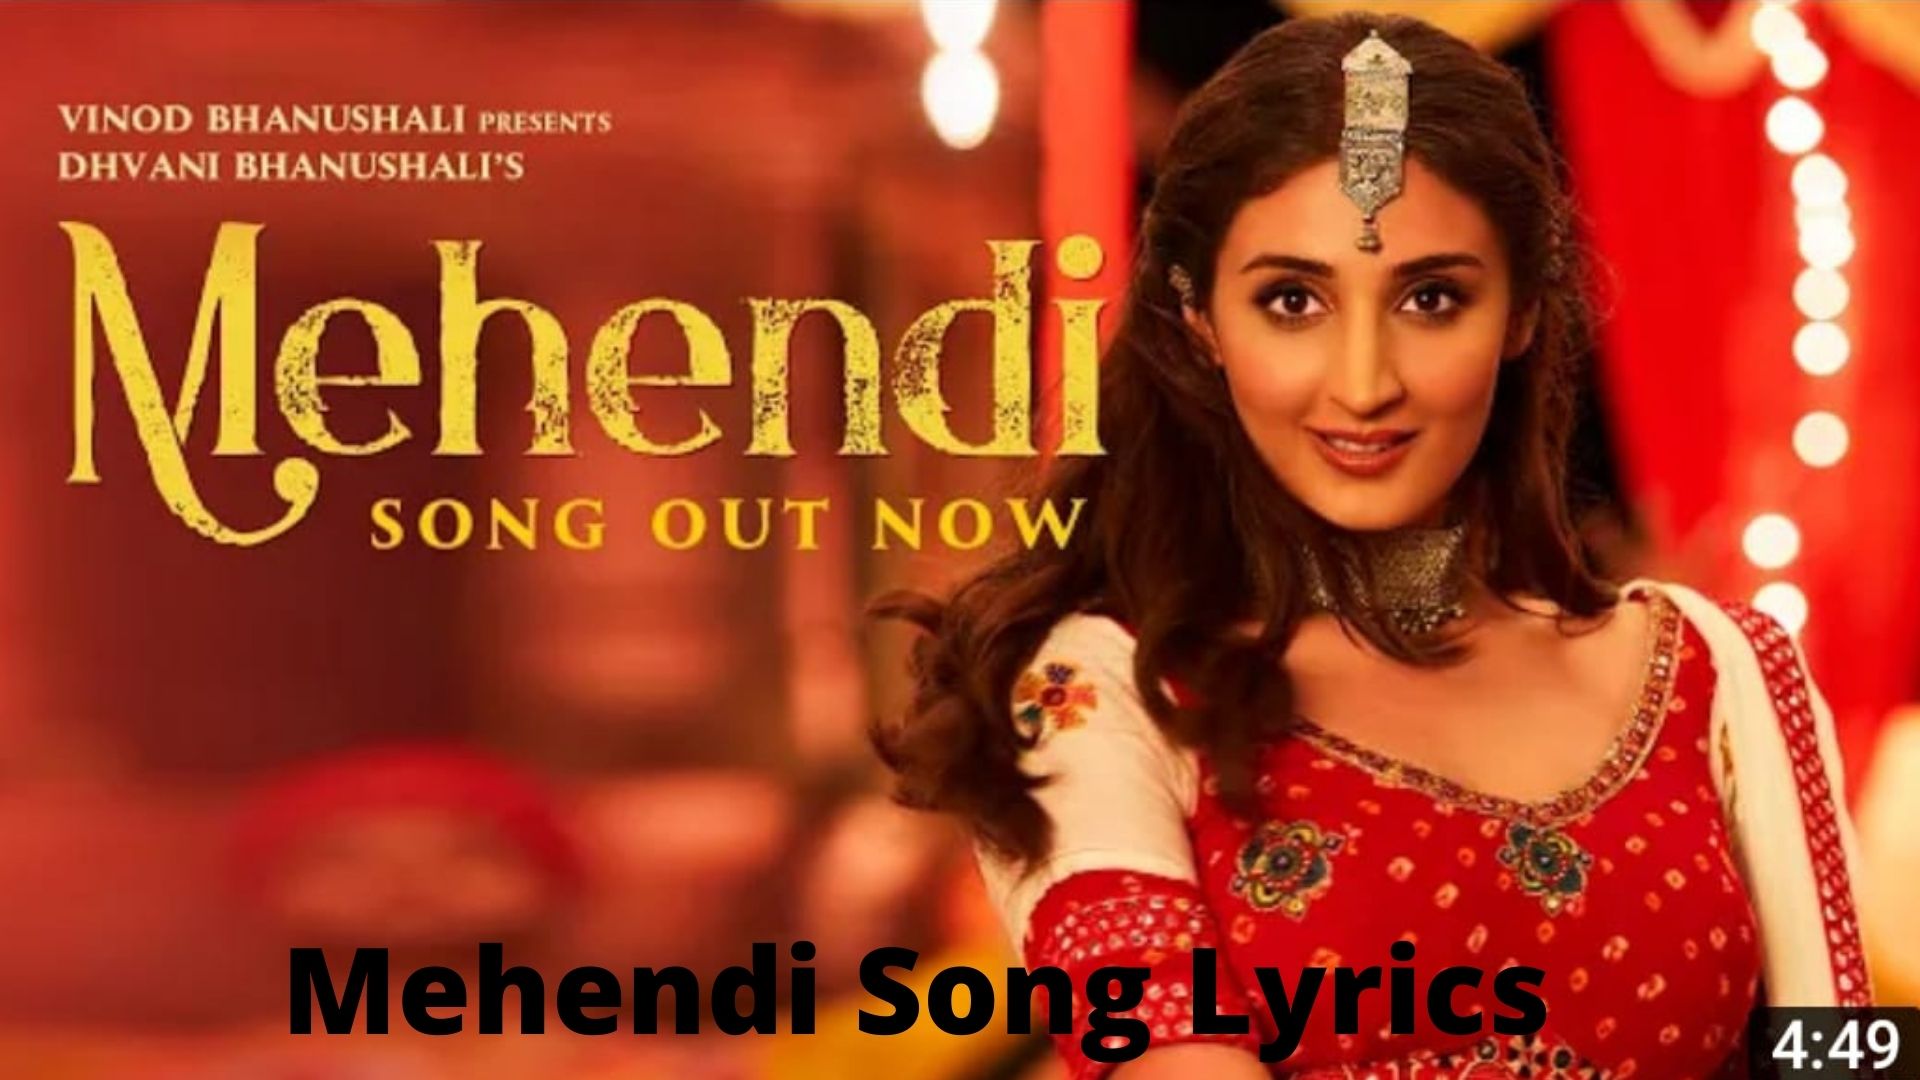 Top indian Wedding Songs | Shadi Song Lyrics in Hindi